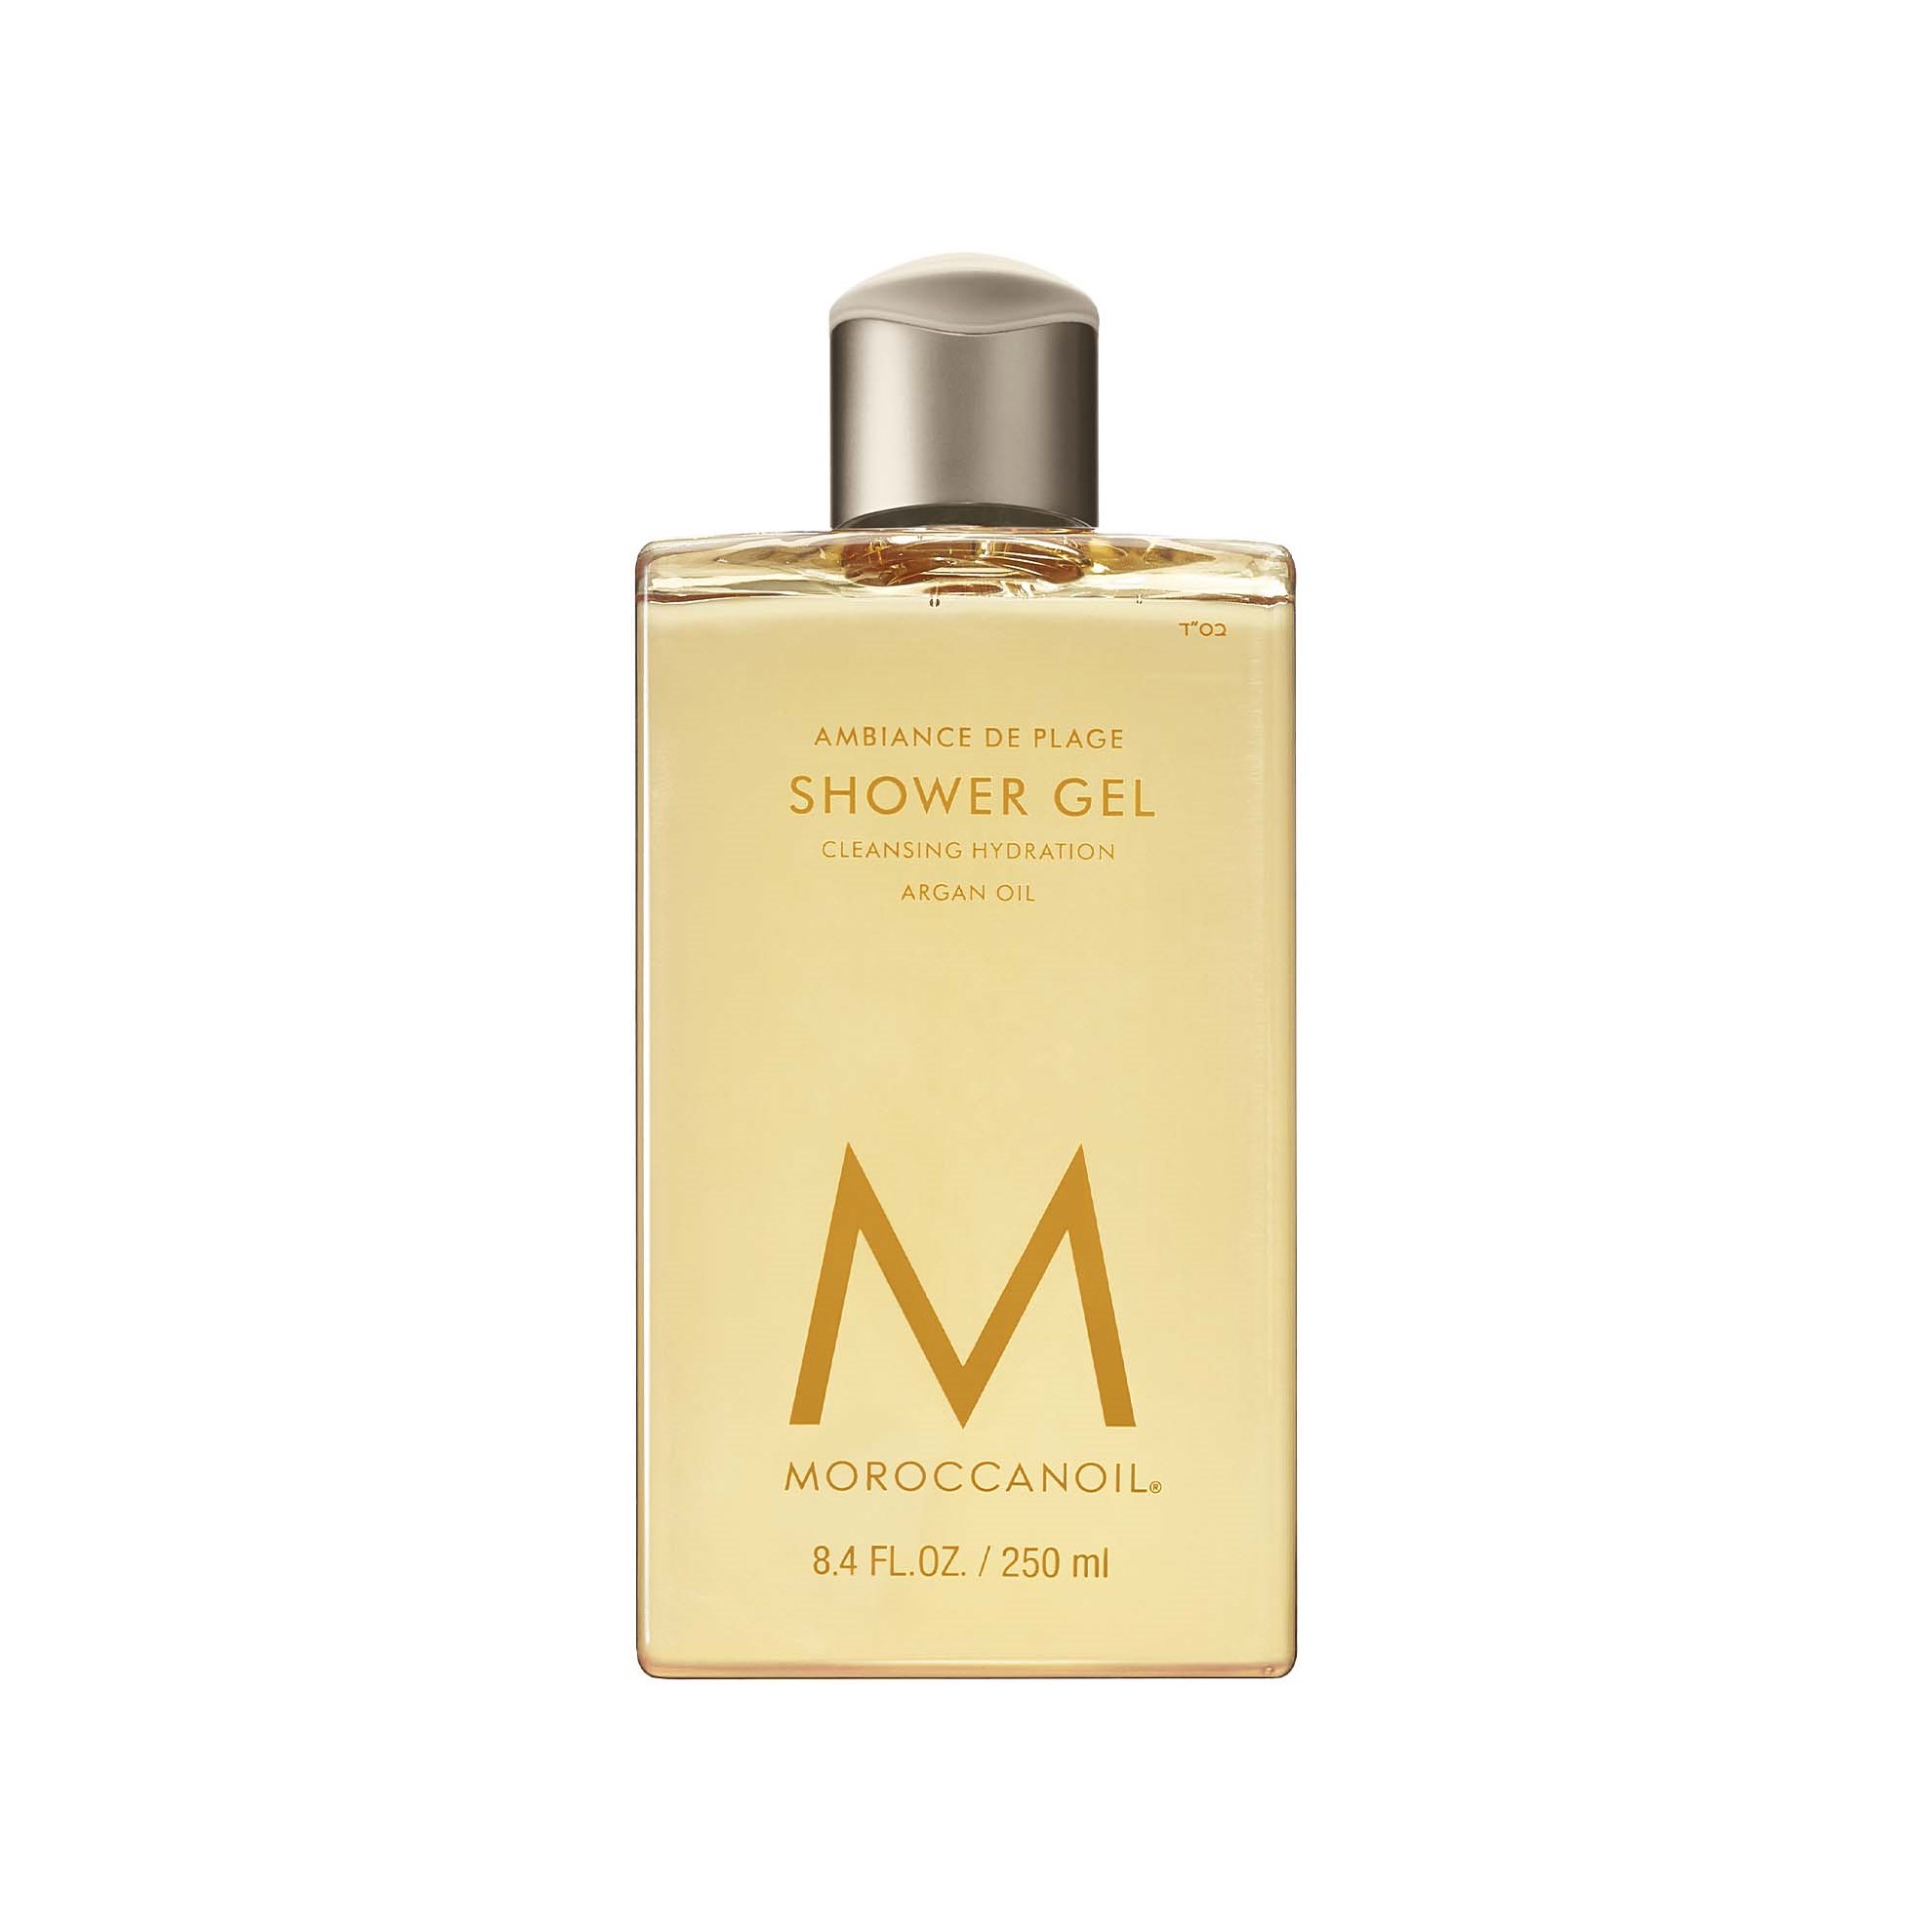 Moroccanoil Body Collection Shower Gel Ambiance de Plage 250 ml